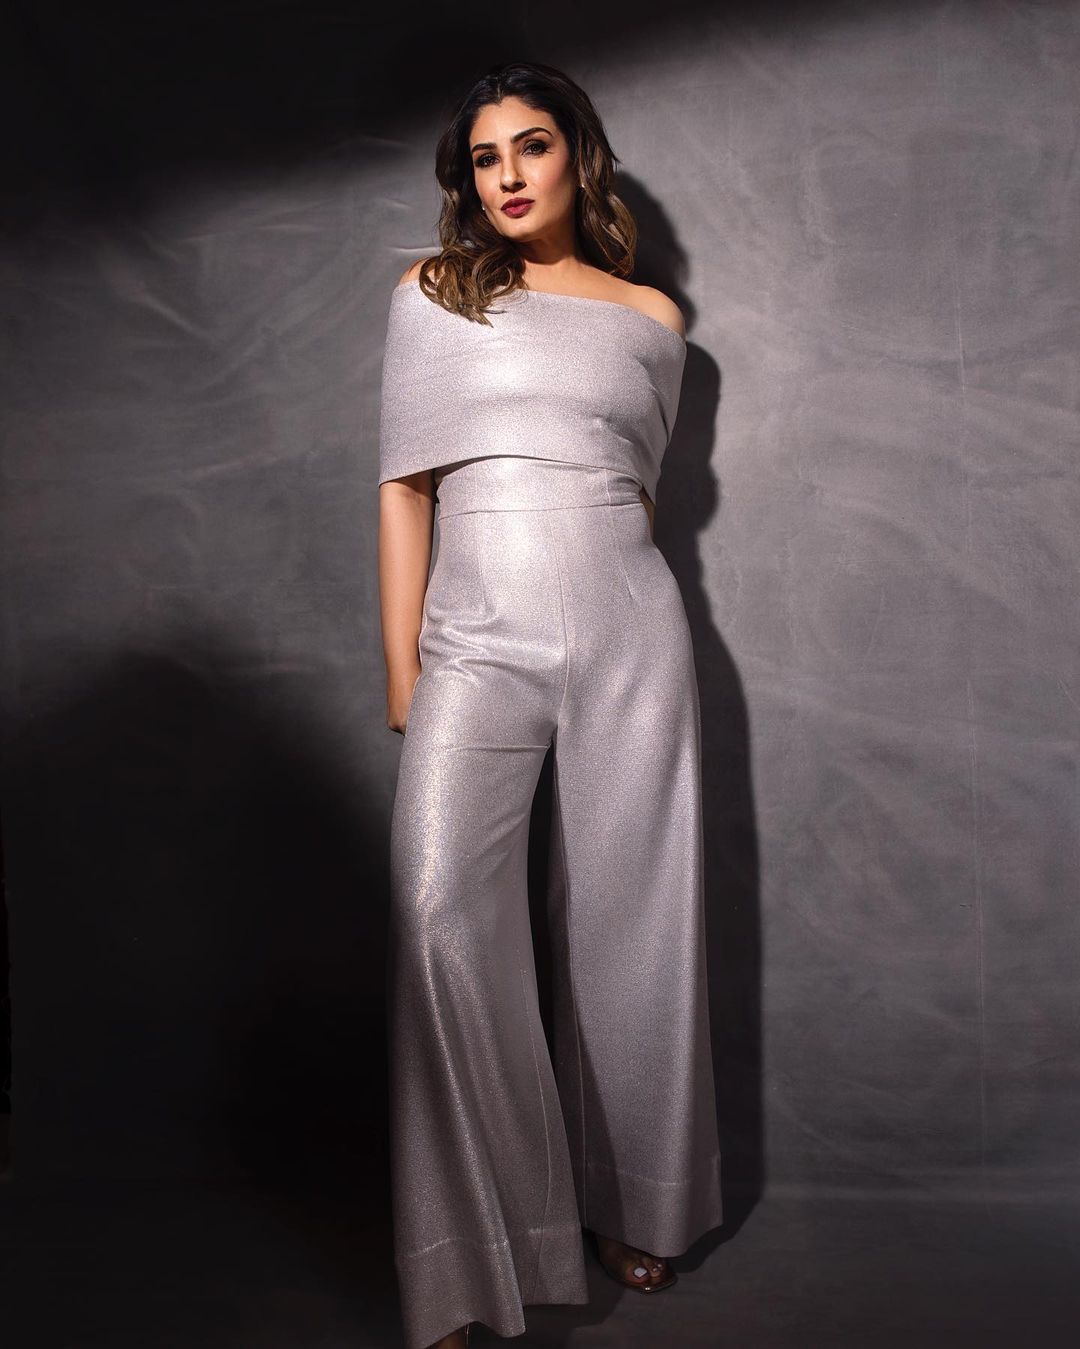 Raveena Tandon looks stylish in the silver jumpsuit